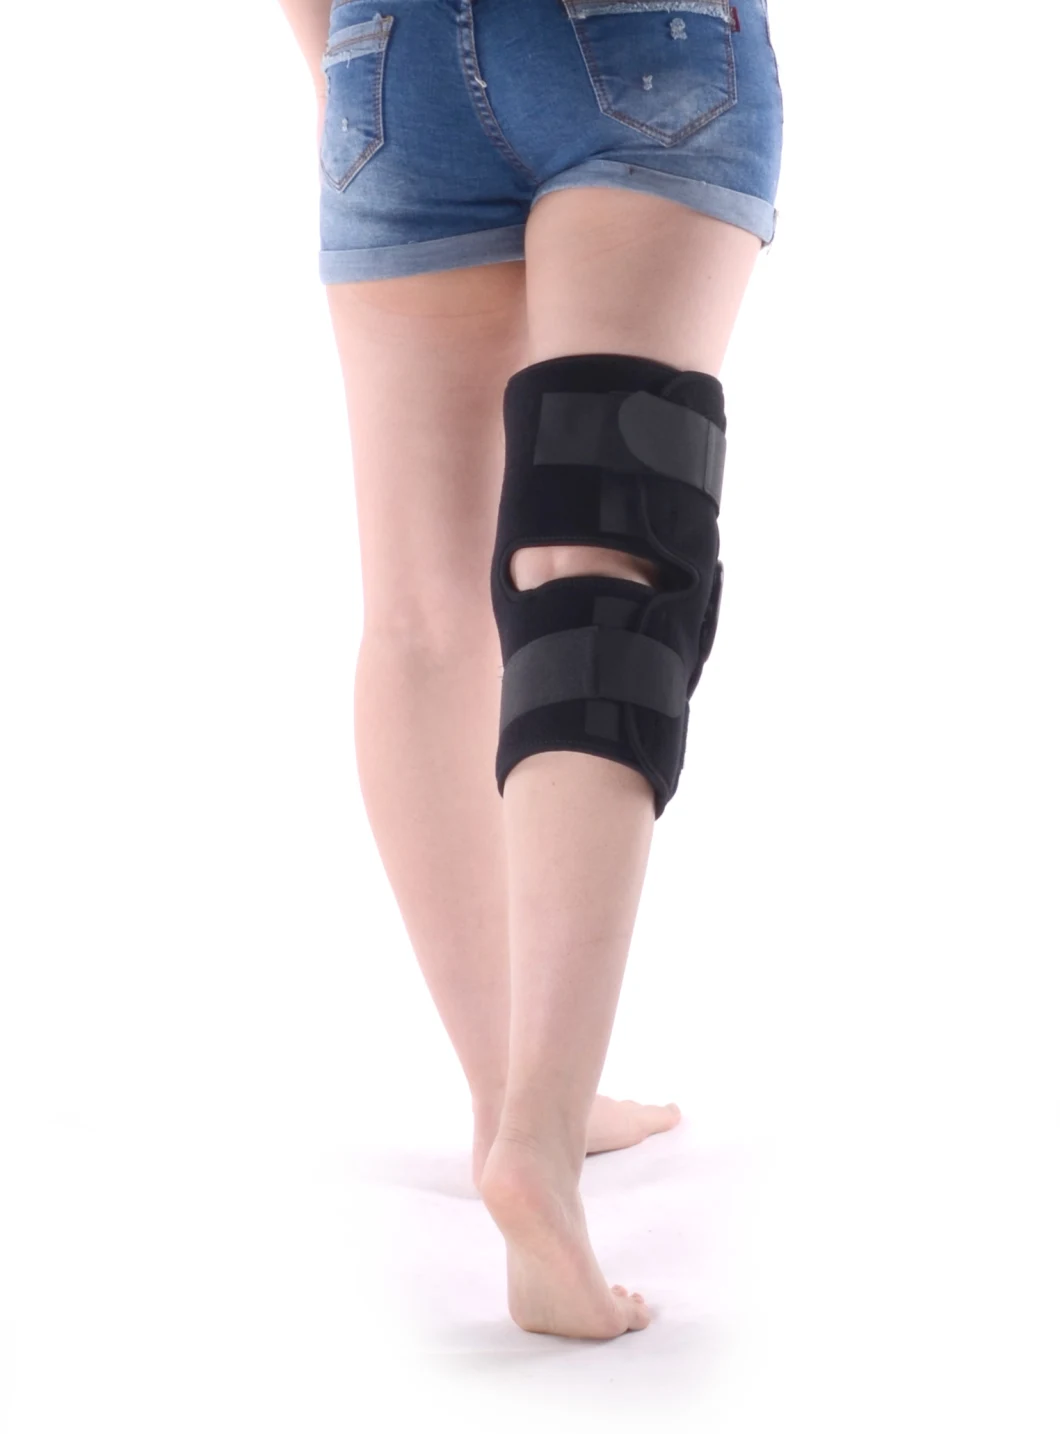 Free Sample Good Quality ROM Knee Brace Support for Injured L1833 Knee Brace